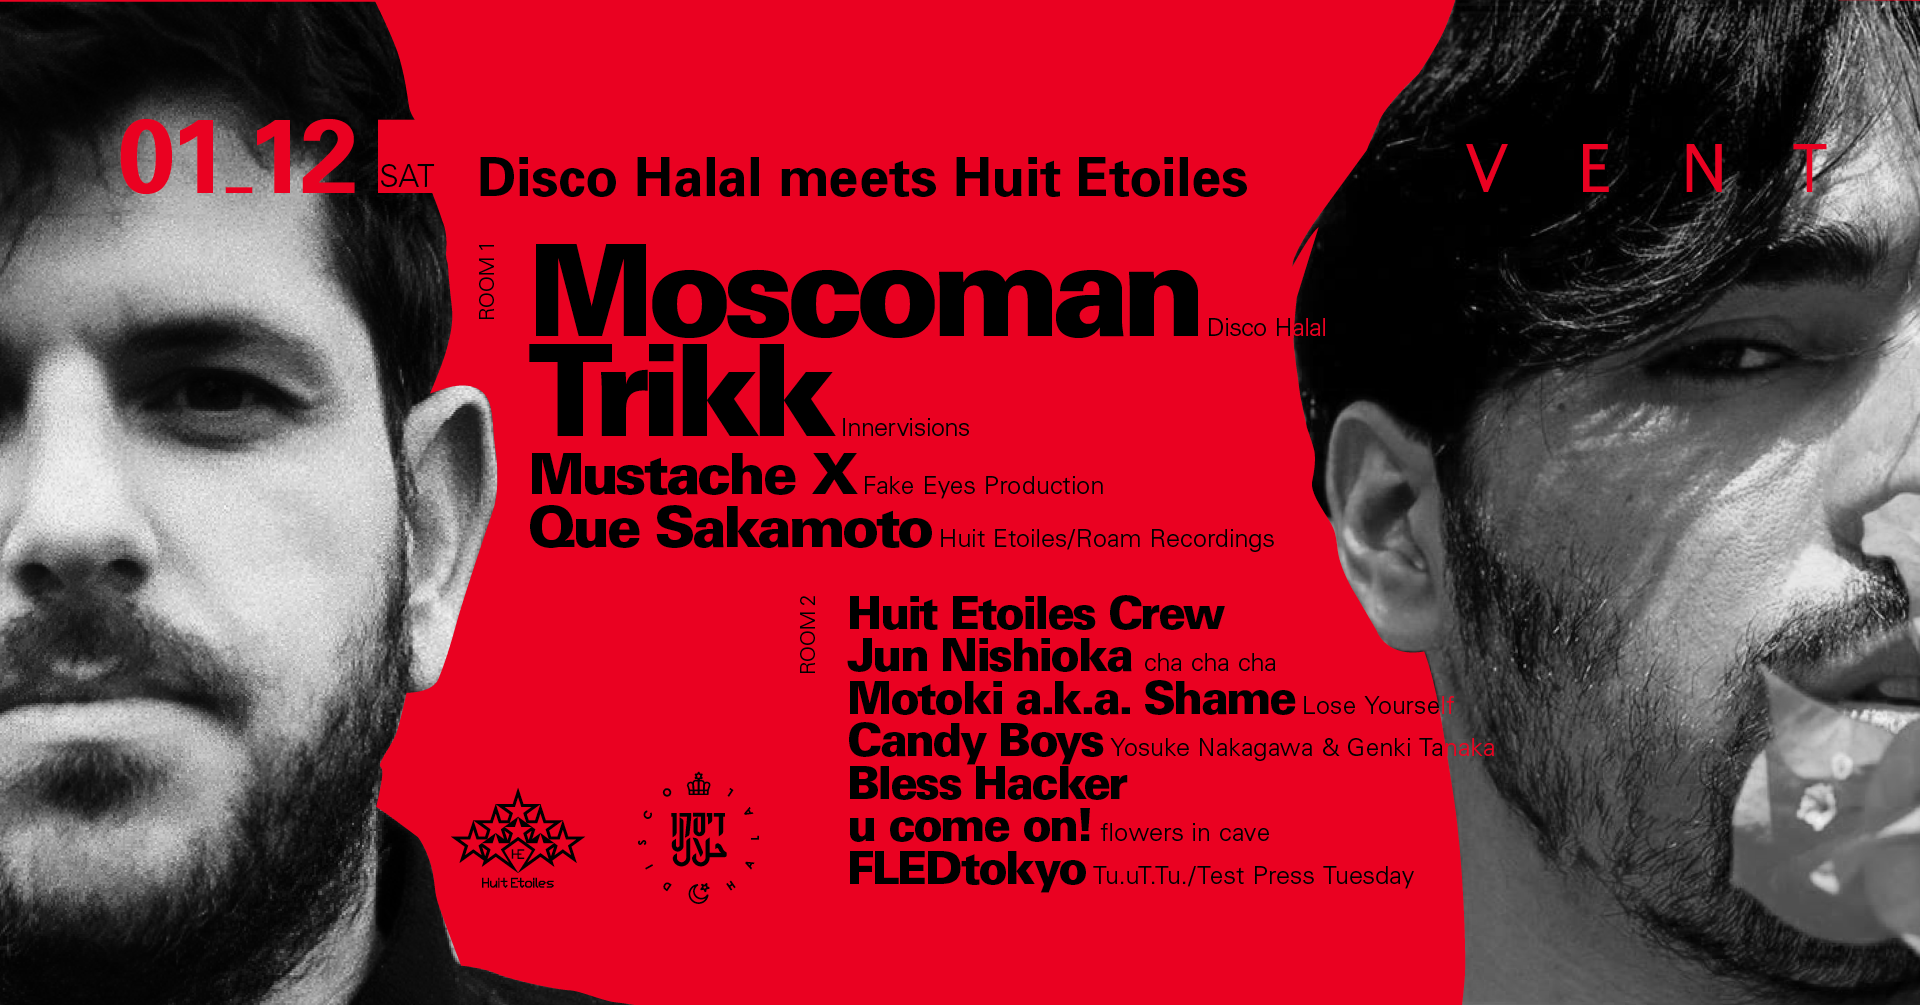 Moscoman & Trikk at Disco Halal meets Huit Etoiles